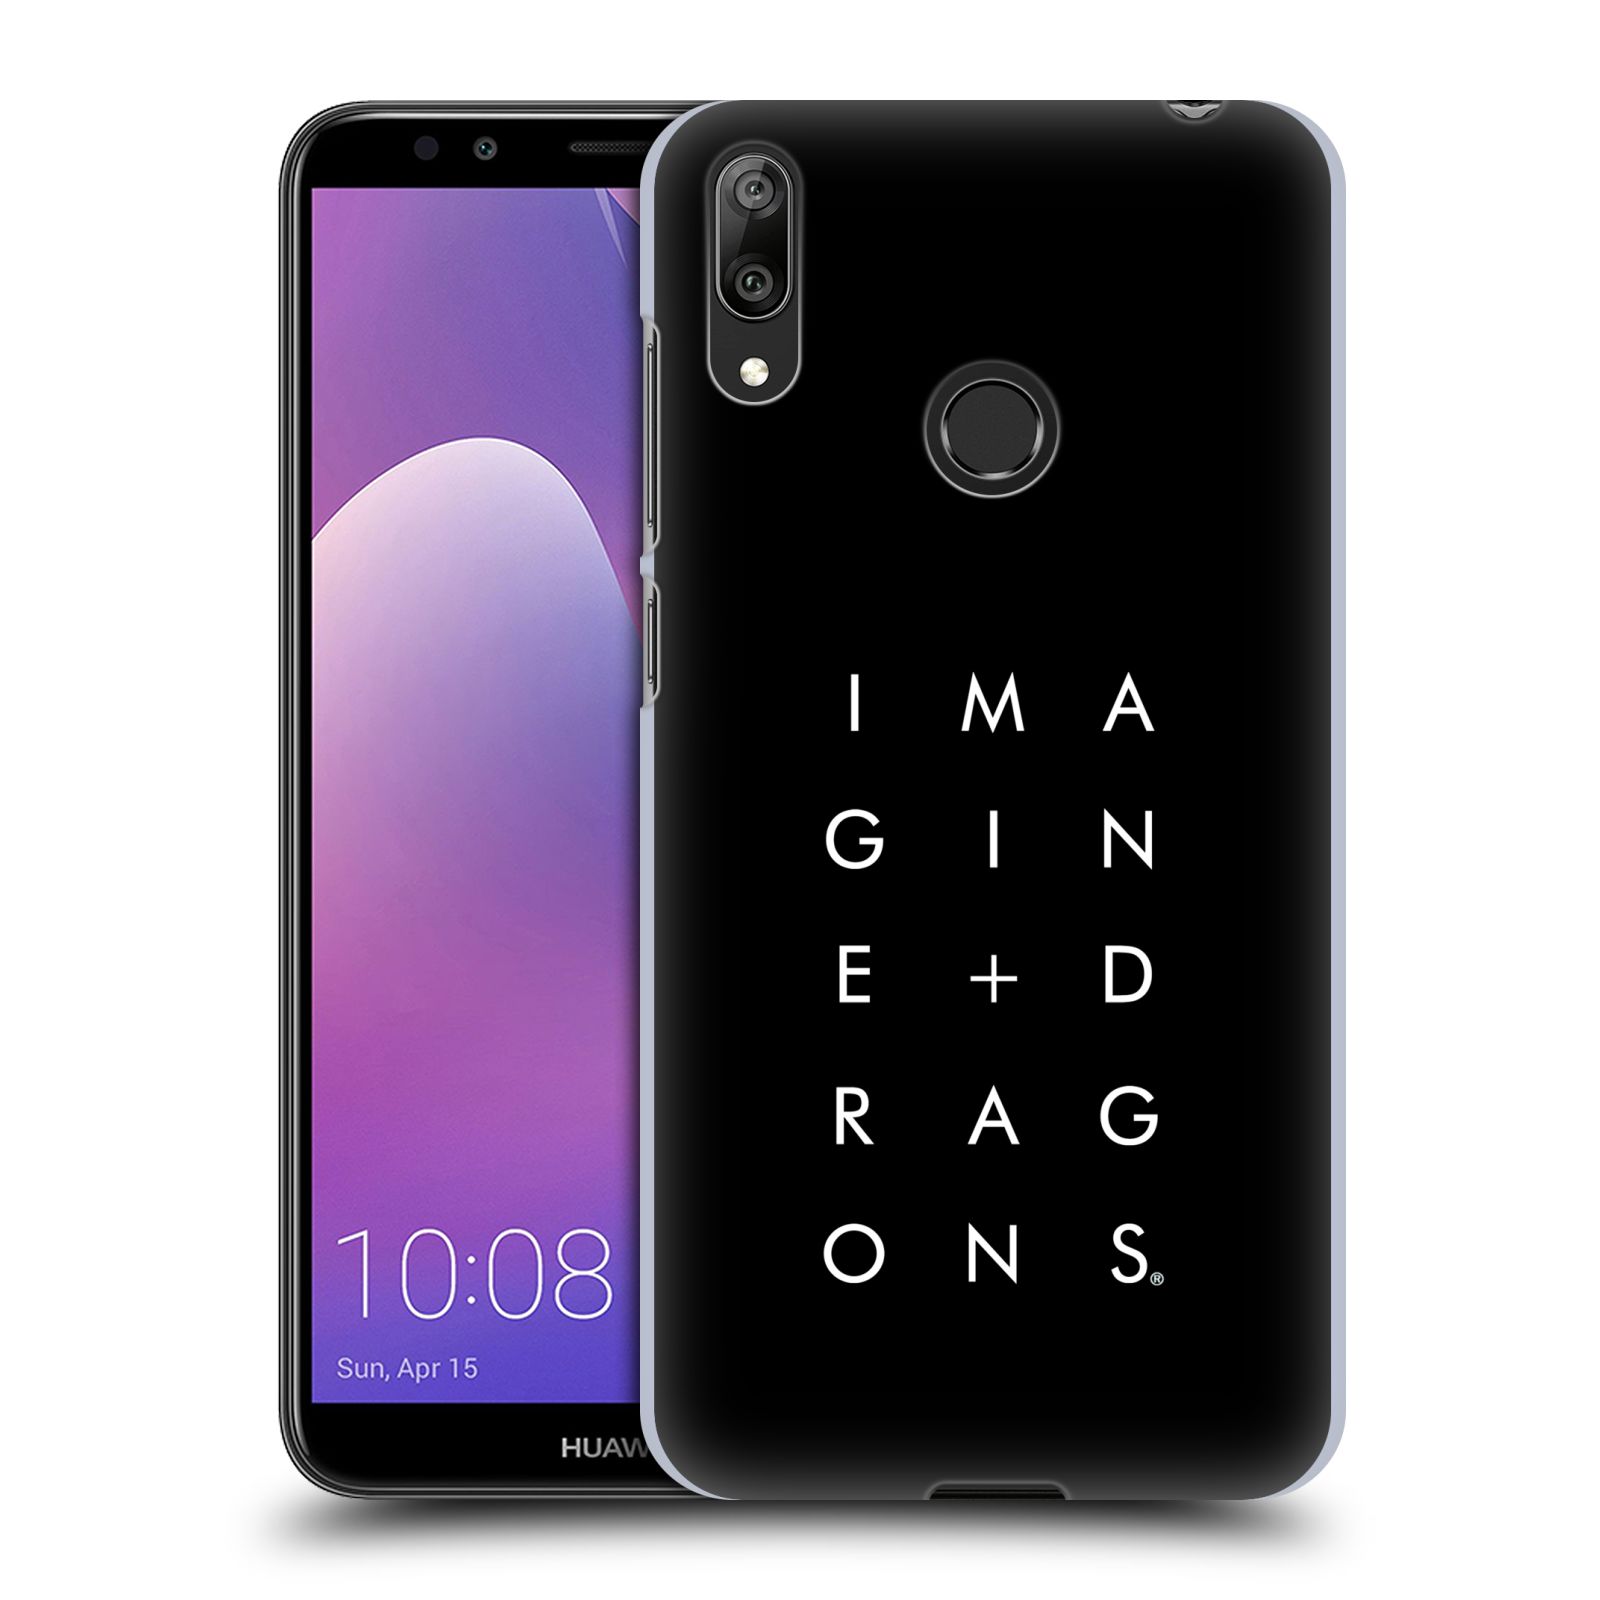 Pouzdro na mobil Huawei Y7 2019 - Head Case - hudební skupina Imagine Dragons logo